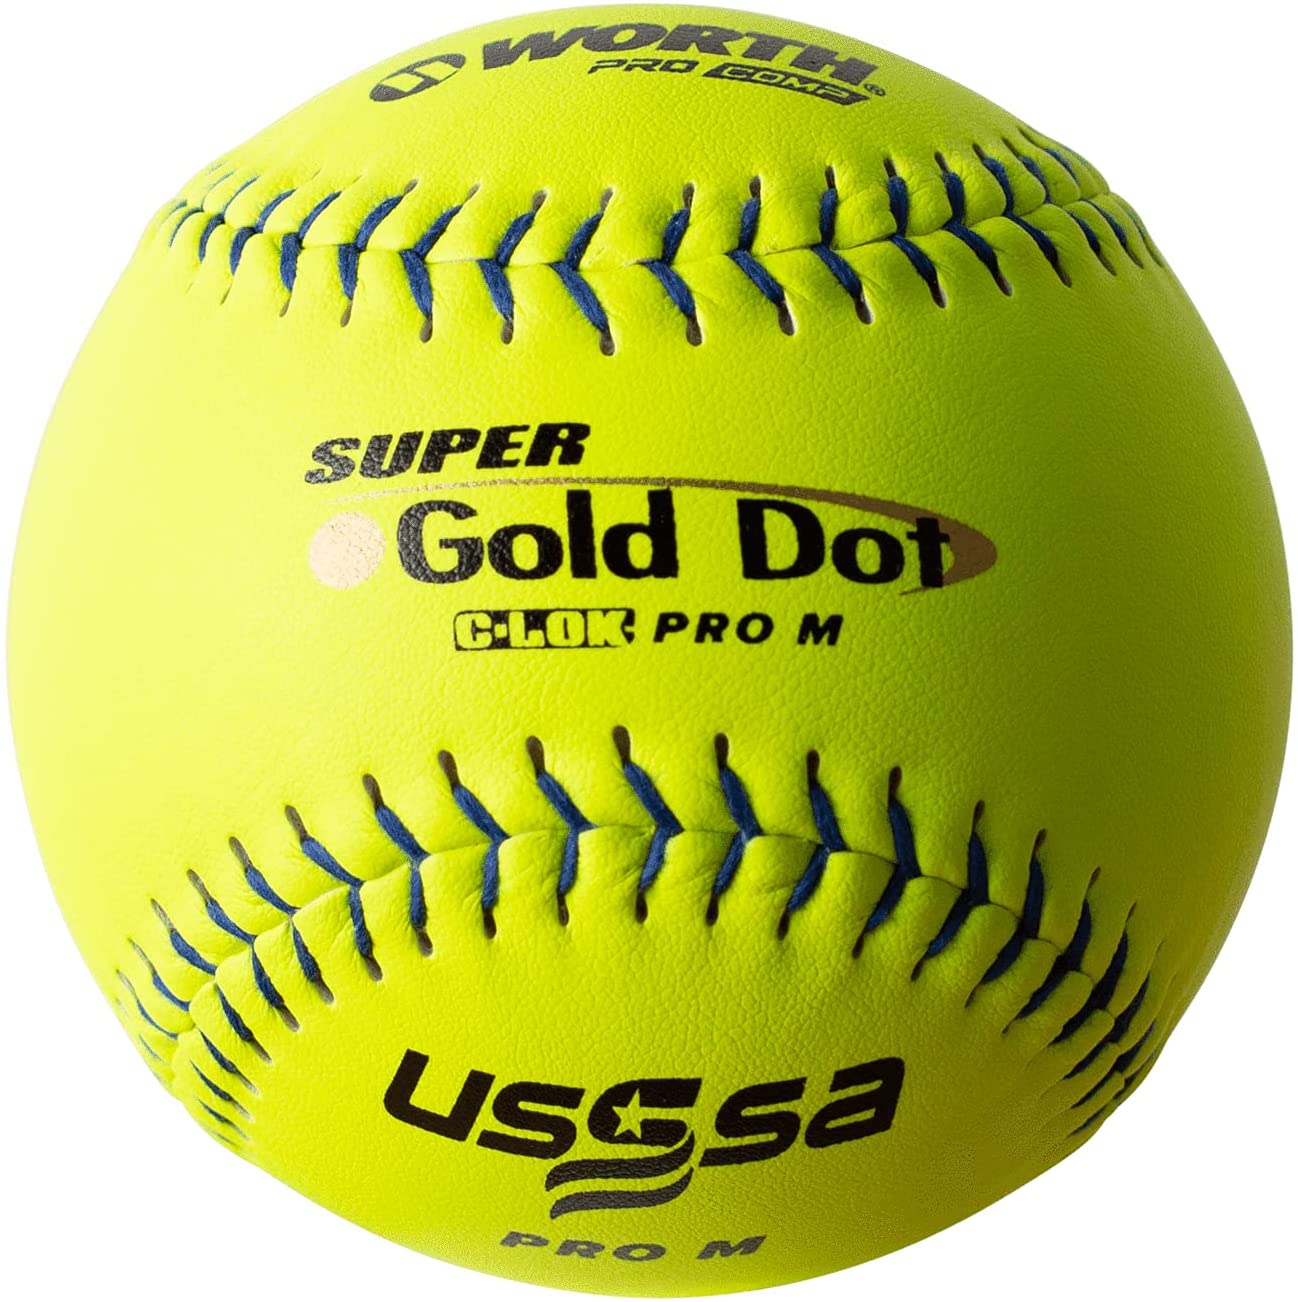 worth-12-pro-comp-super-gold-dot-pro-m-softballs-1-dozen UM12CY-DOZ Worth  <ul> <li>12 Slowpitch Softball</li> <li>USSSA PRO M Stamp</li> <li><em>Pro-M is the